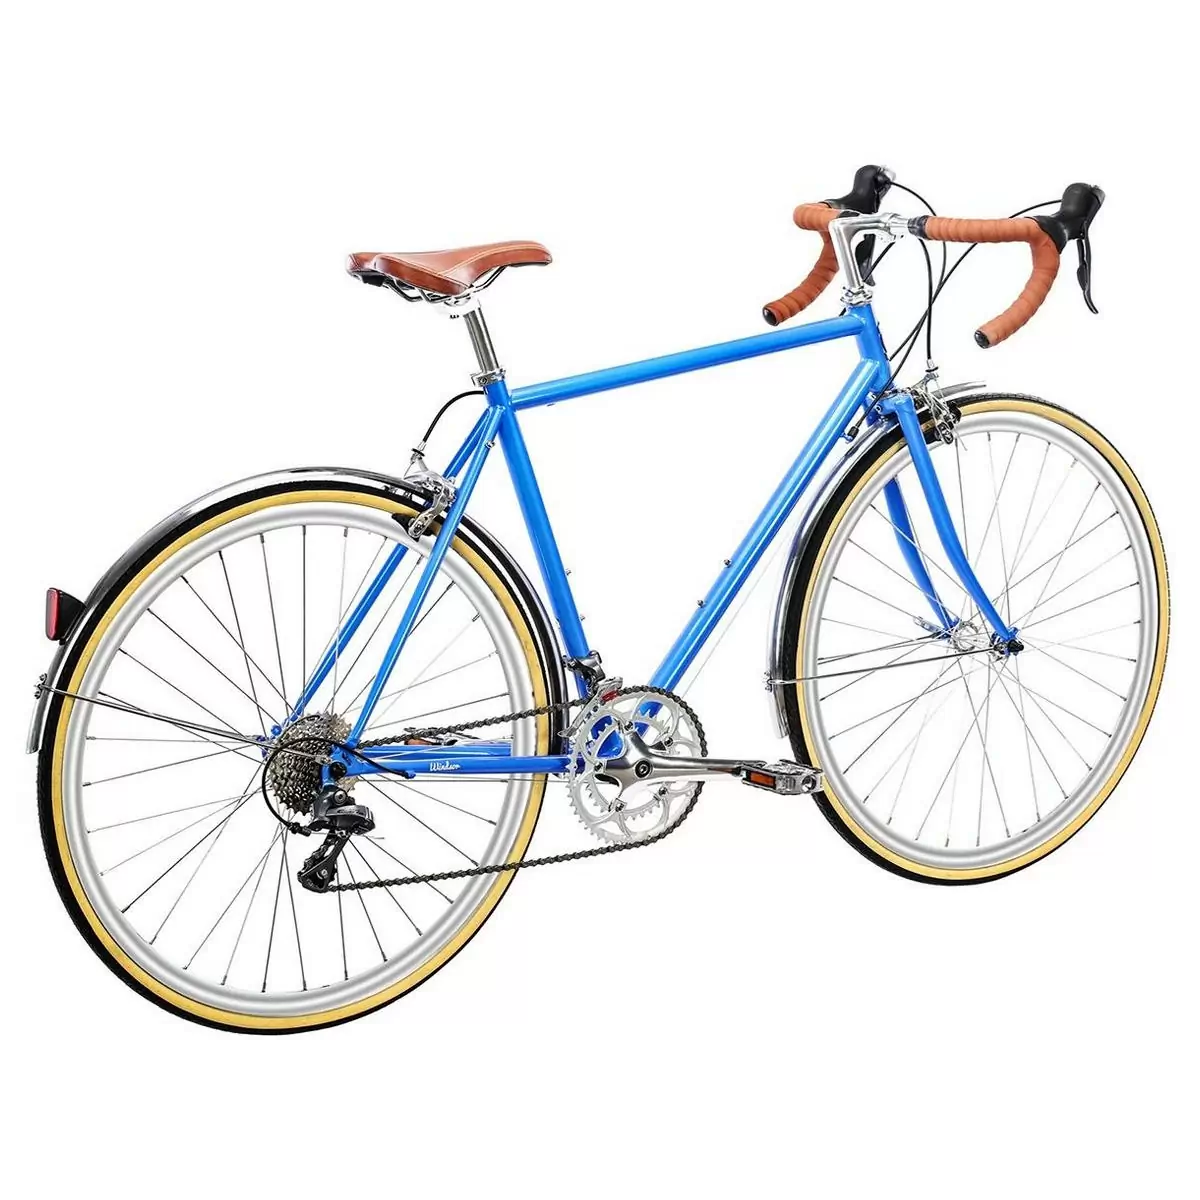 Bicicleta urbana TROY 16spd azul windsor médio 54cm #2